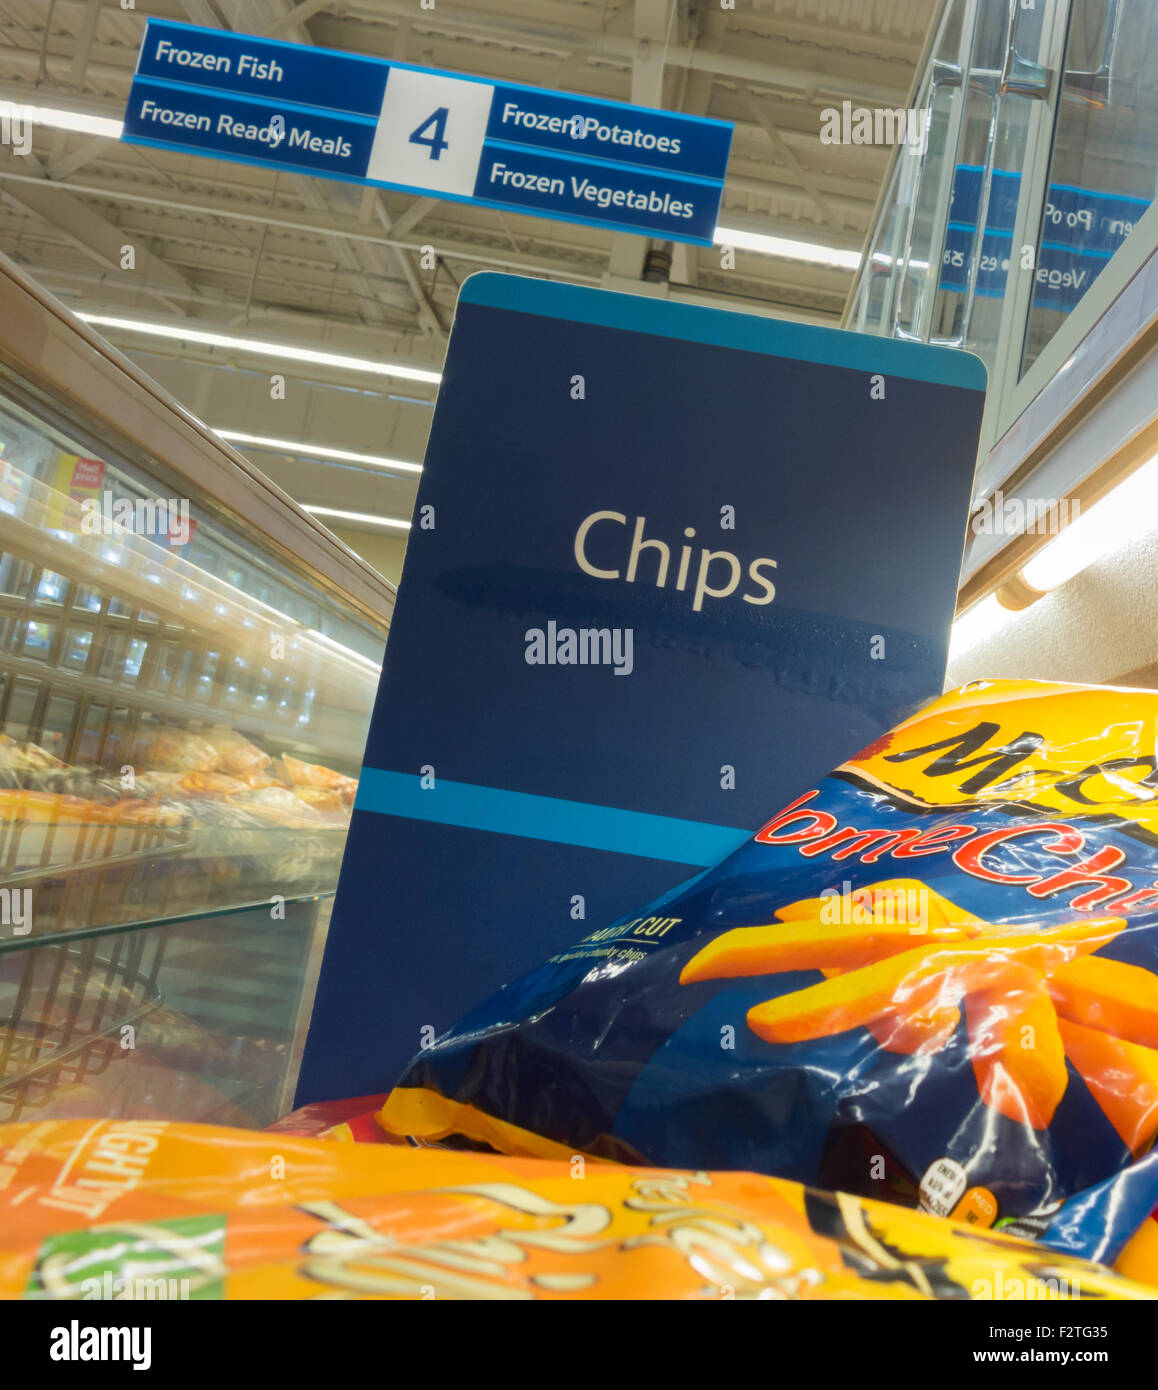 Mccain frozen chips in Tesco supermarket Stock Photo